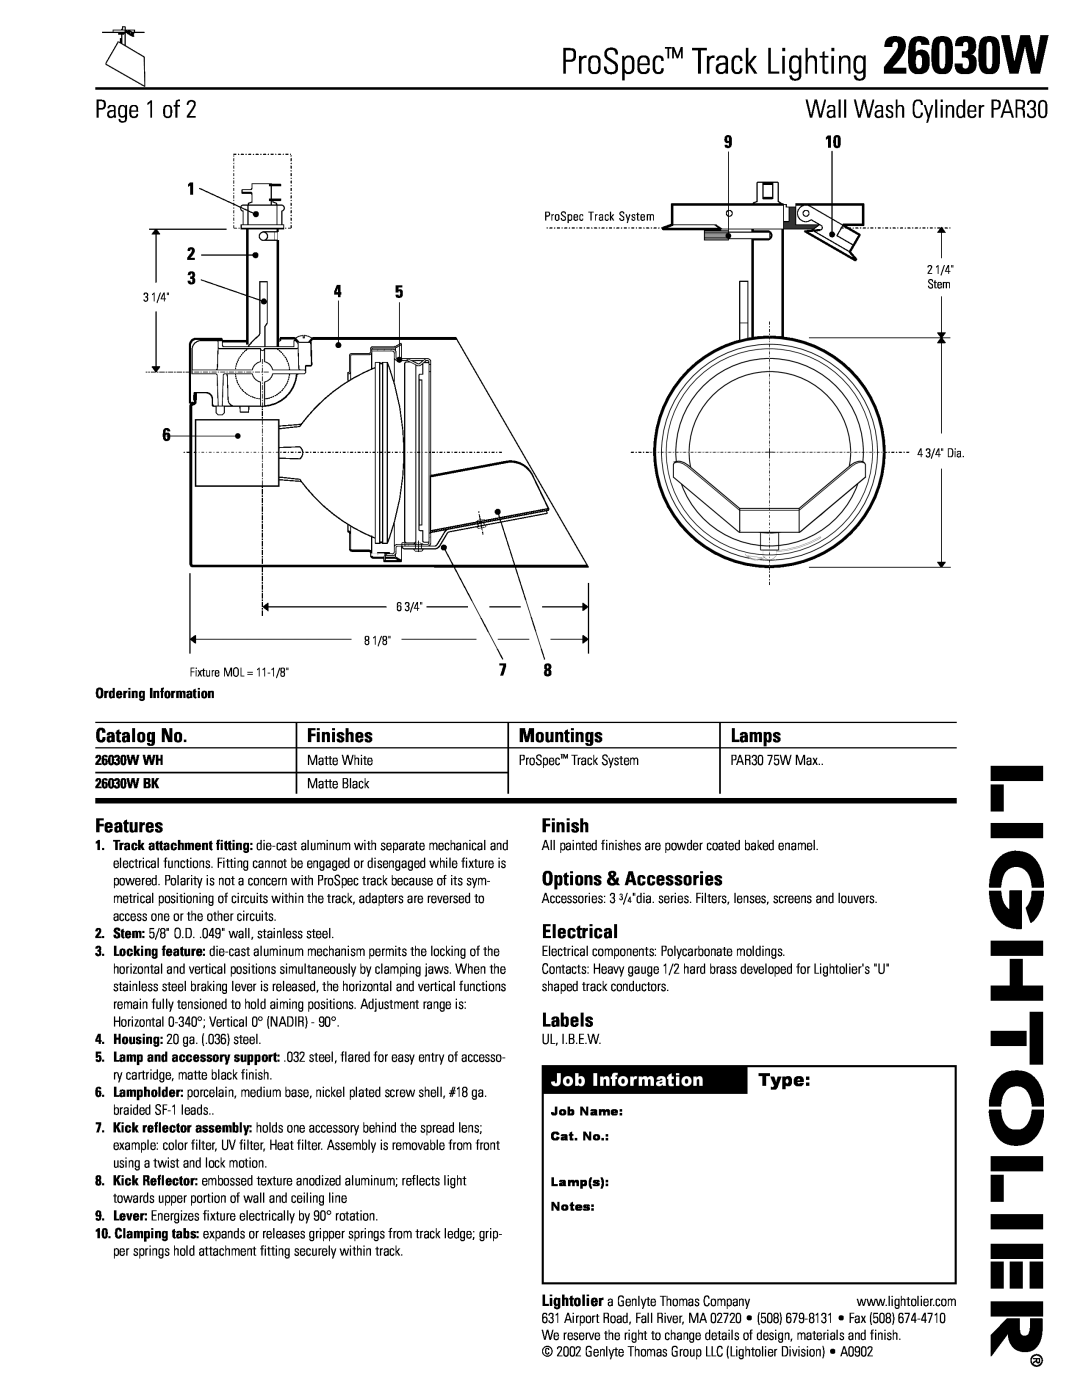 Lightolier manual Job Information, Type, Ordering Information, 26030W WH, 26030W BK, ProSpec Track Lighting 26030W 